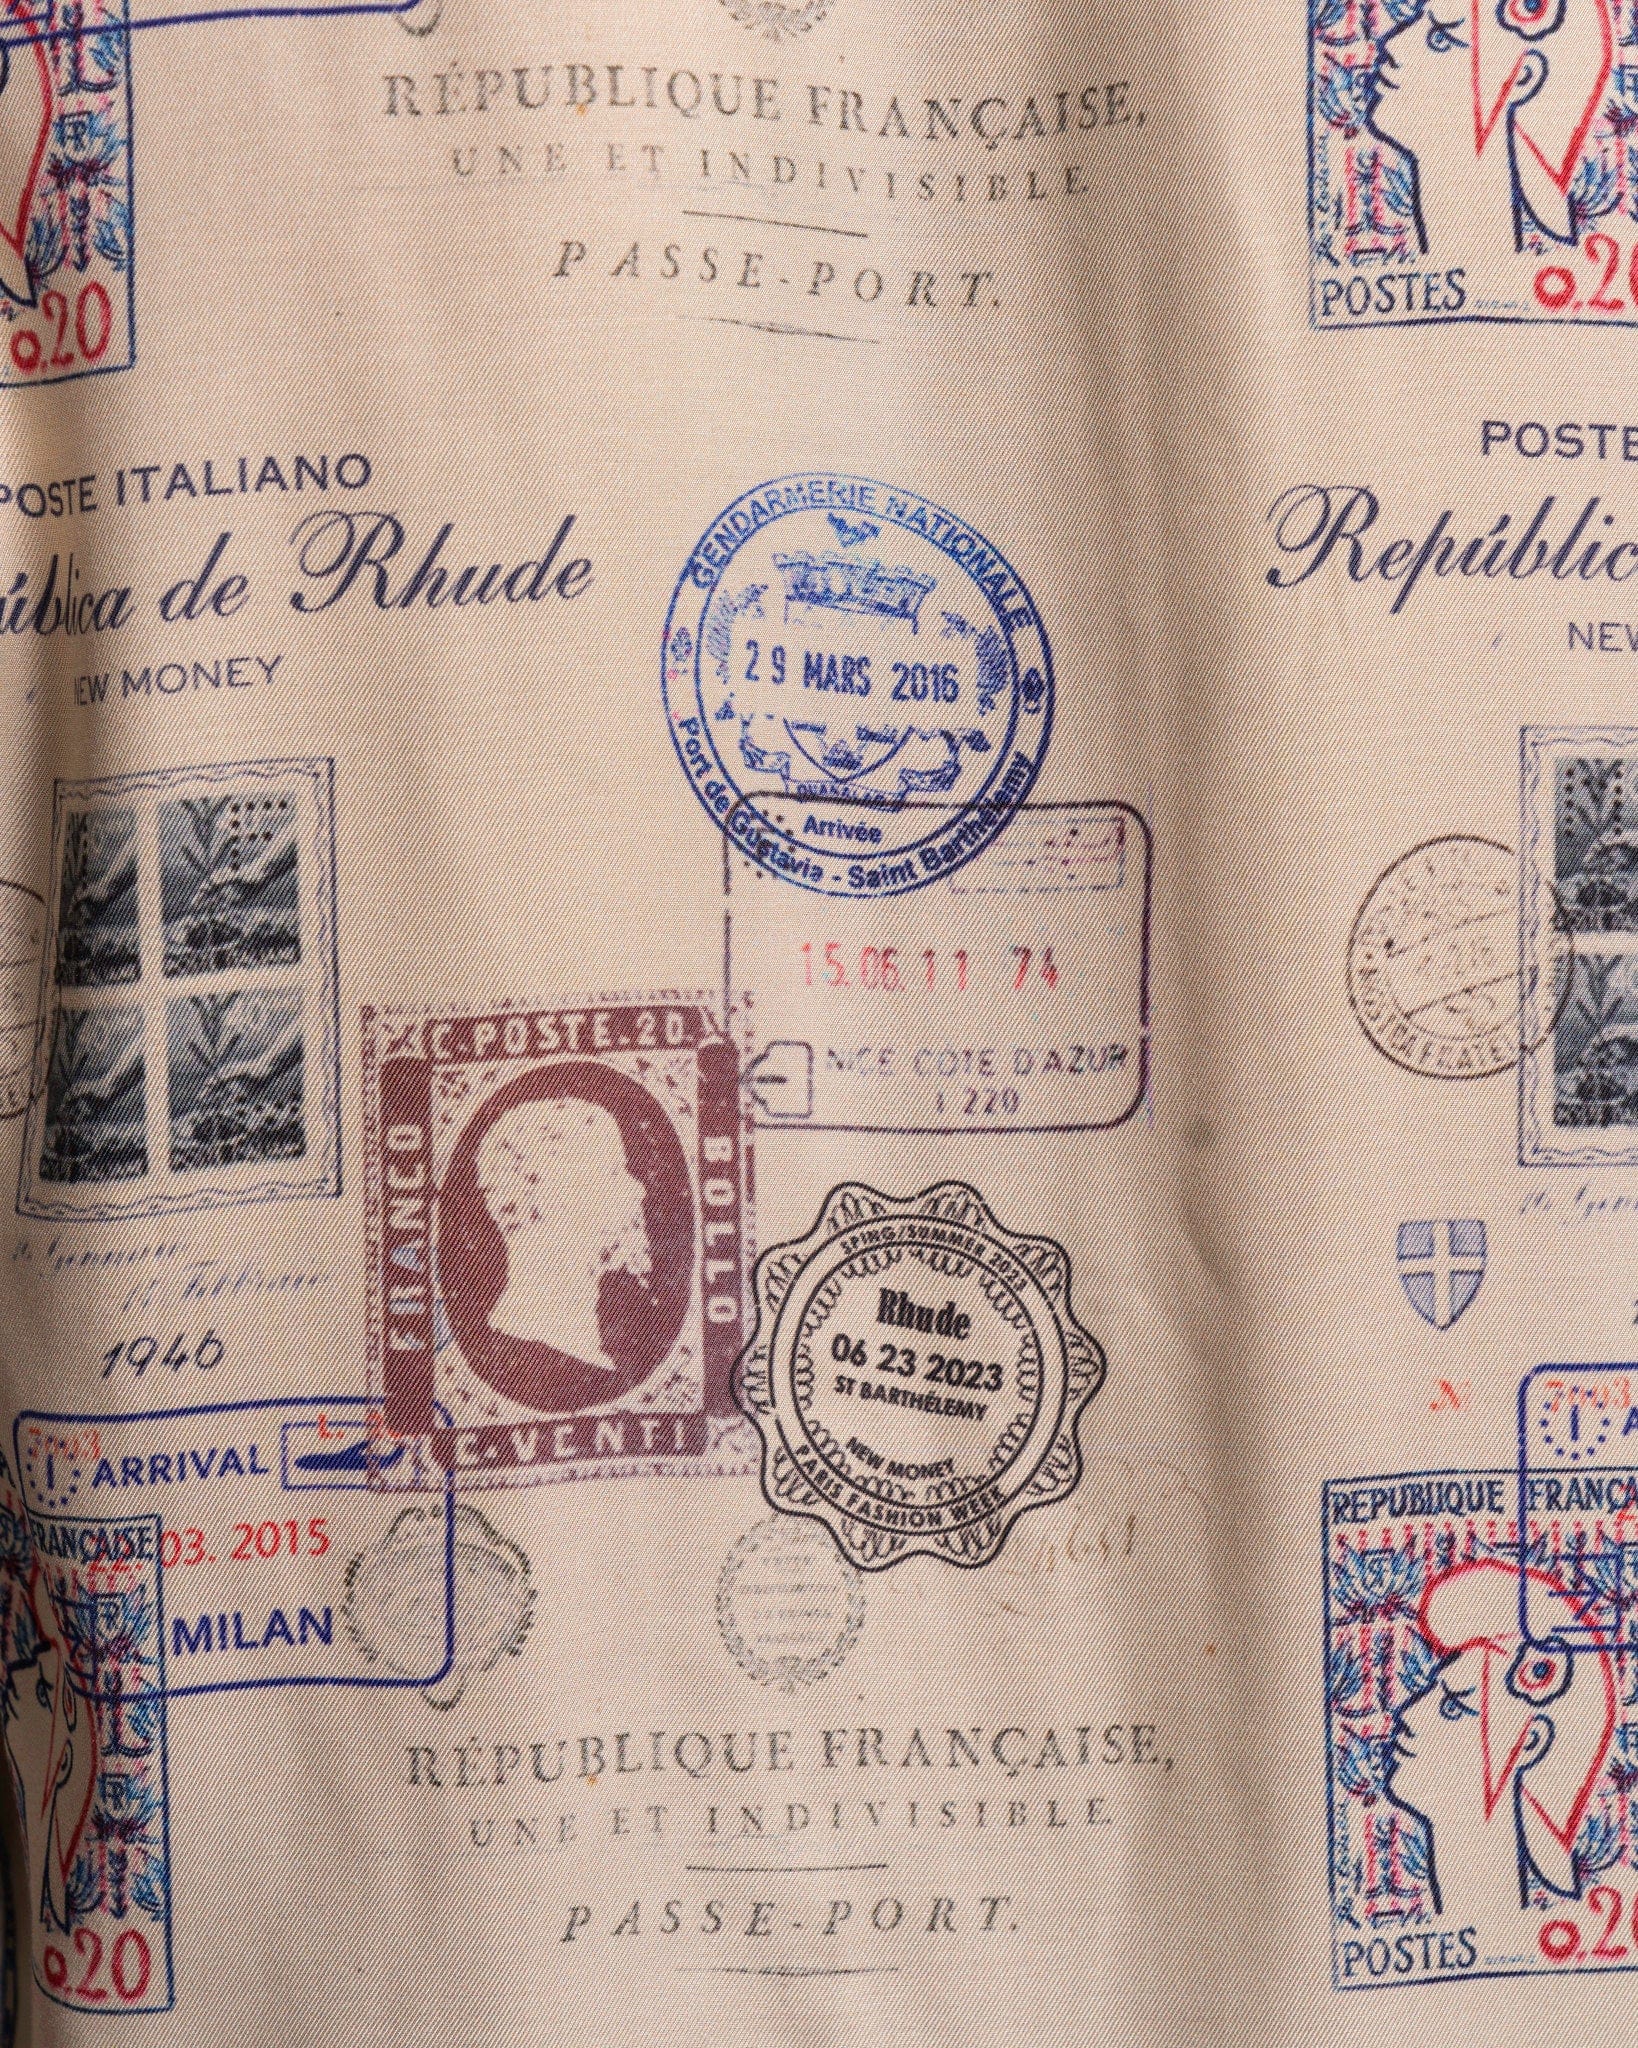 Rhude Men's Shirts Passport Stamp Print Shirt in Beige/Multi